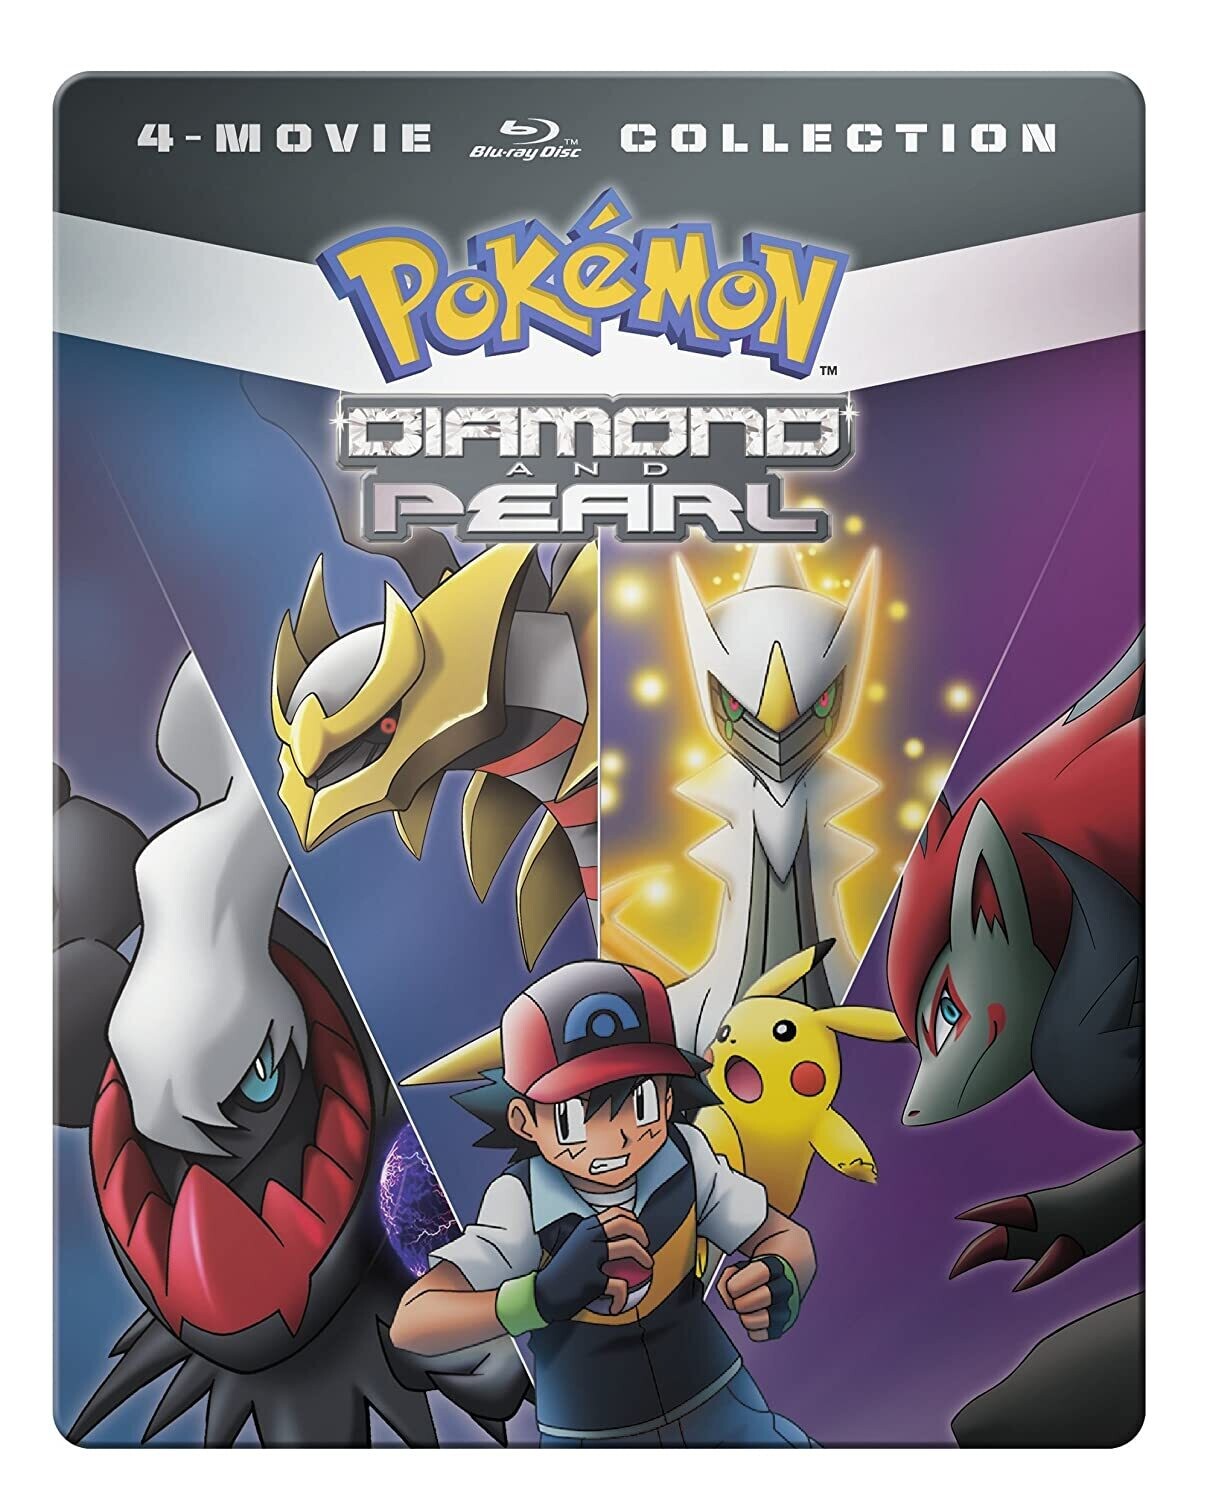 Pokemon: Diamond & Pearl (4 Movie Collection) Blu-ray Steelbook